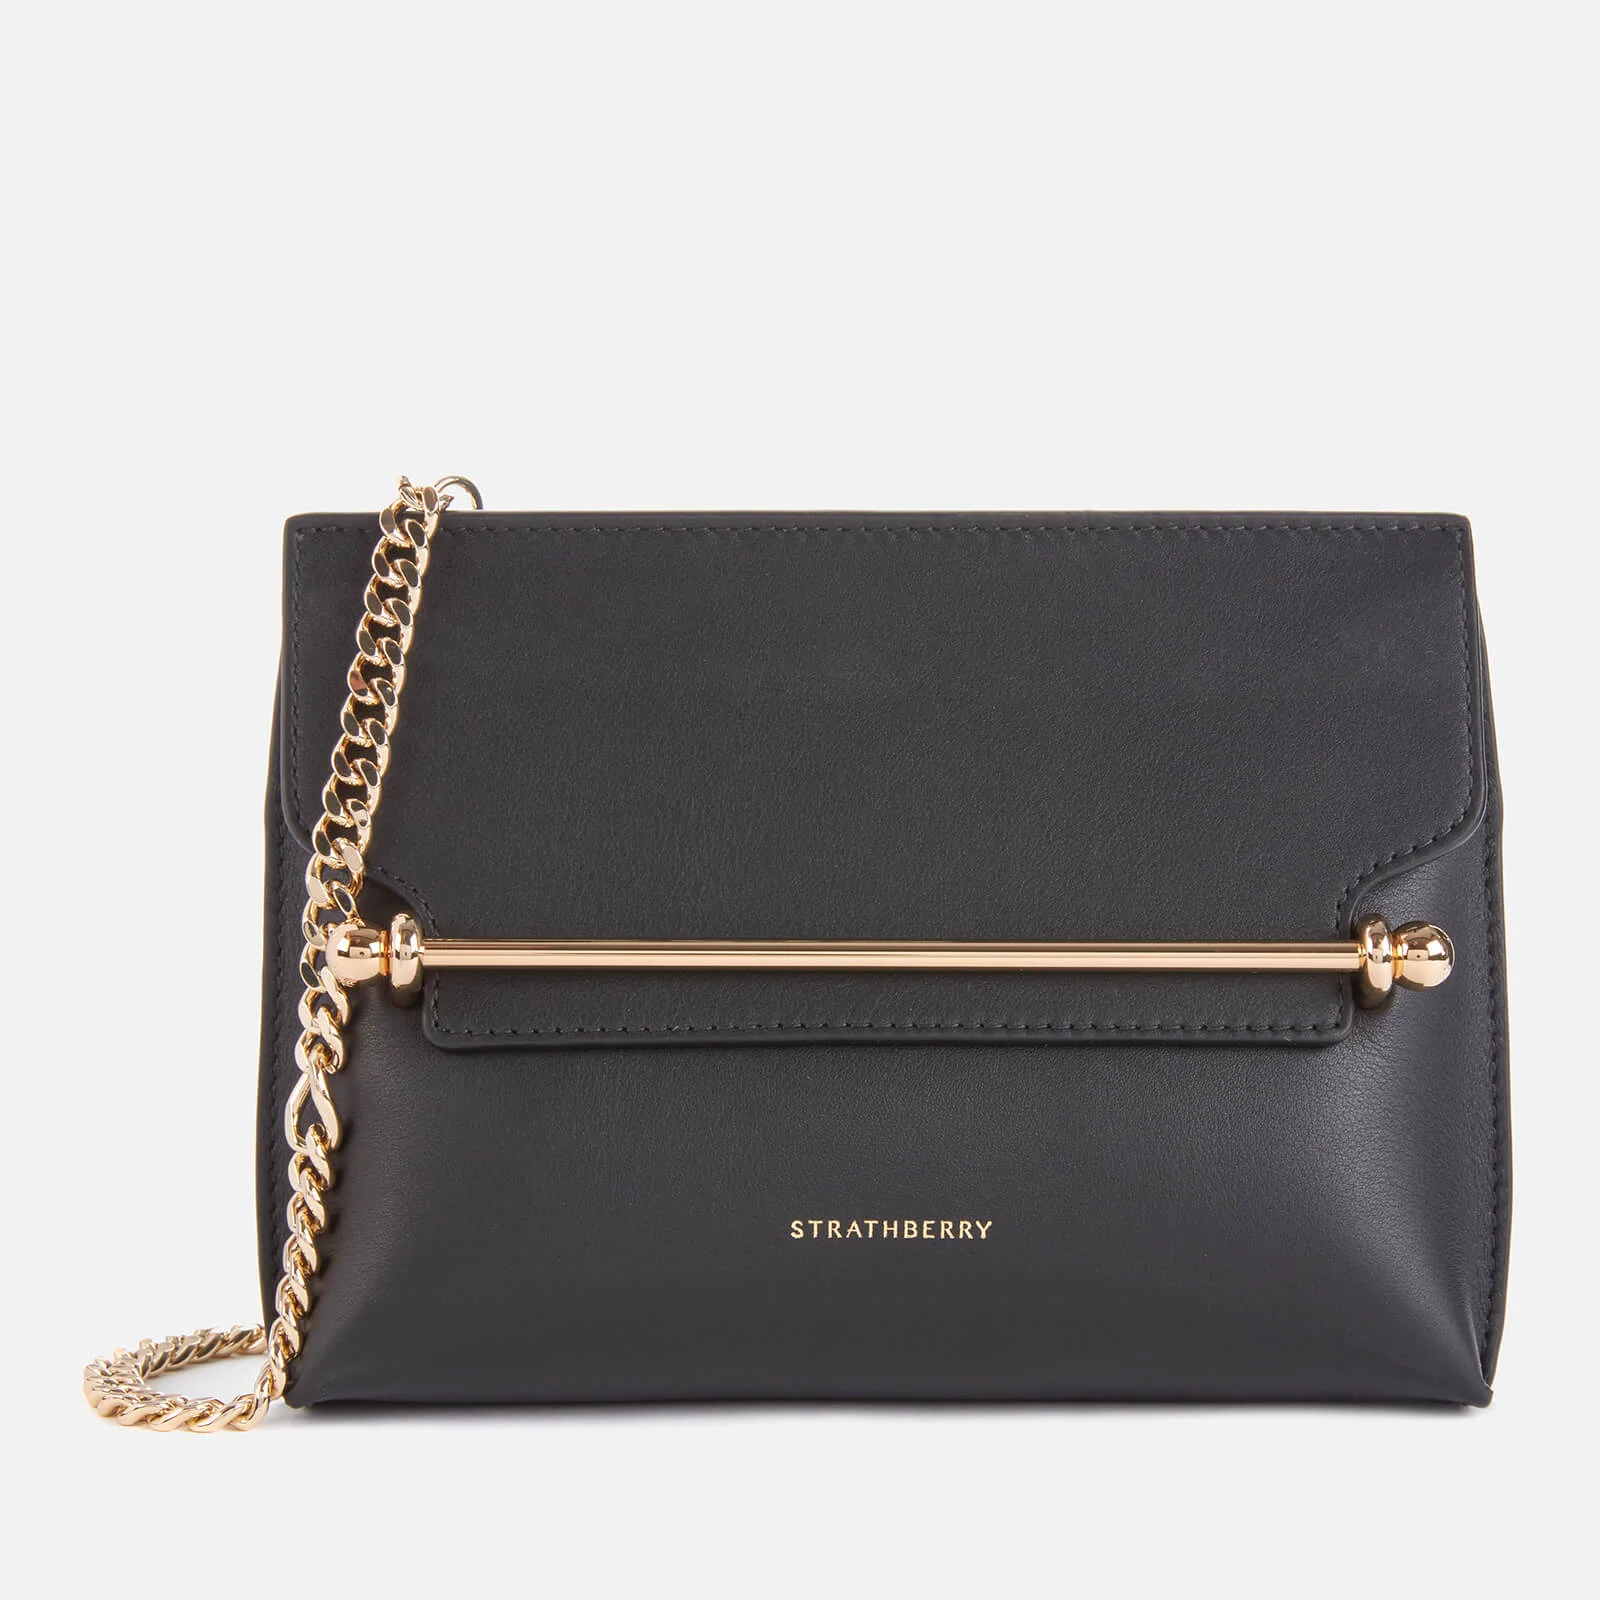 Strathberry Women's Stylist Mini Bag - Black Image 1